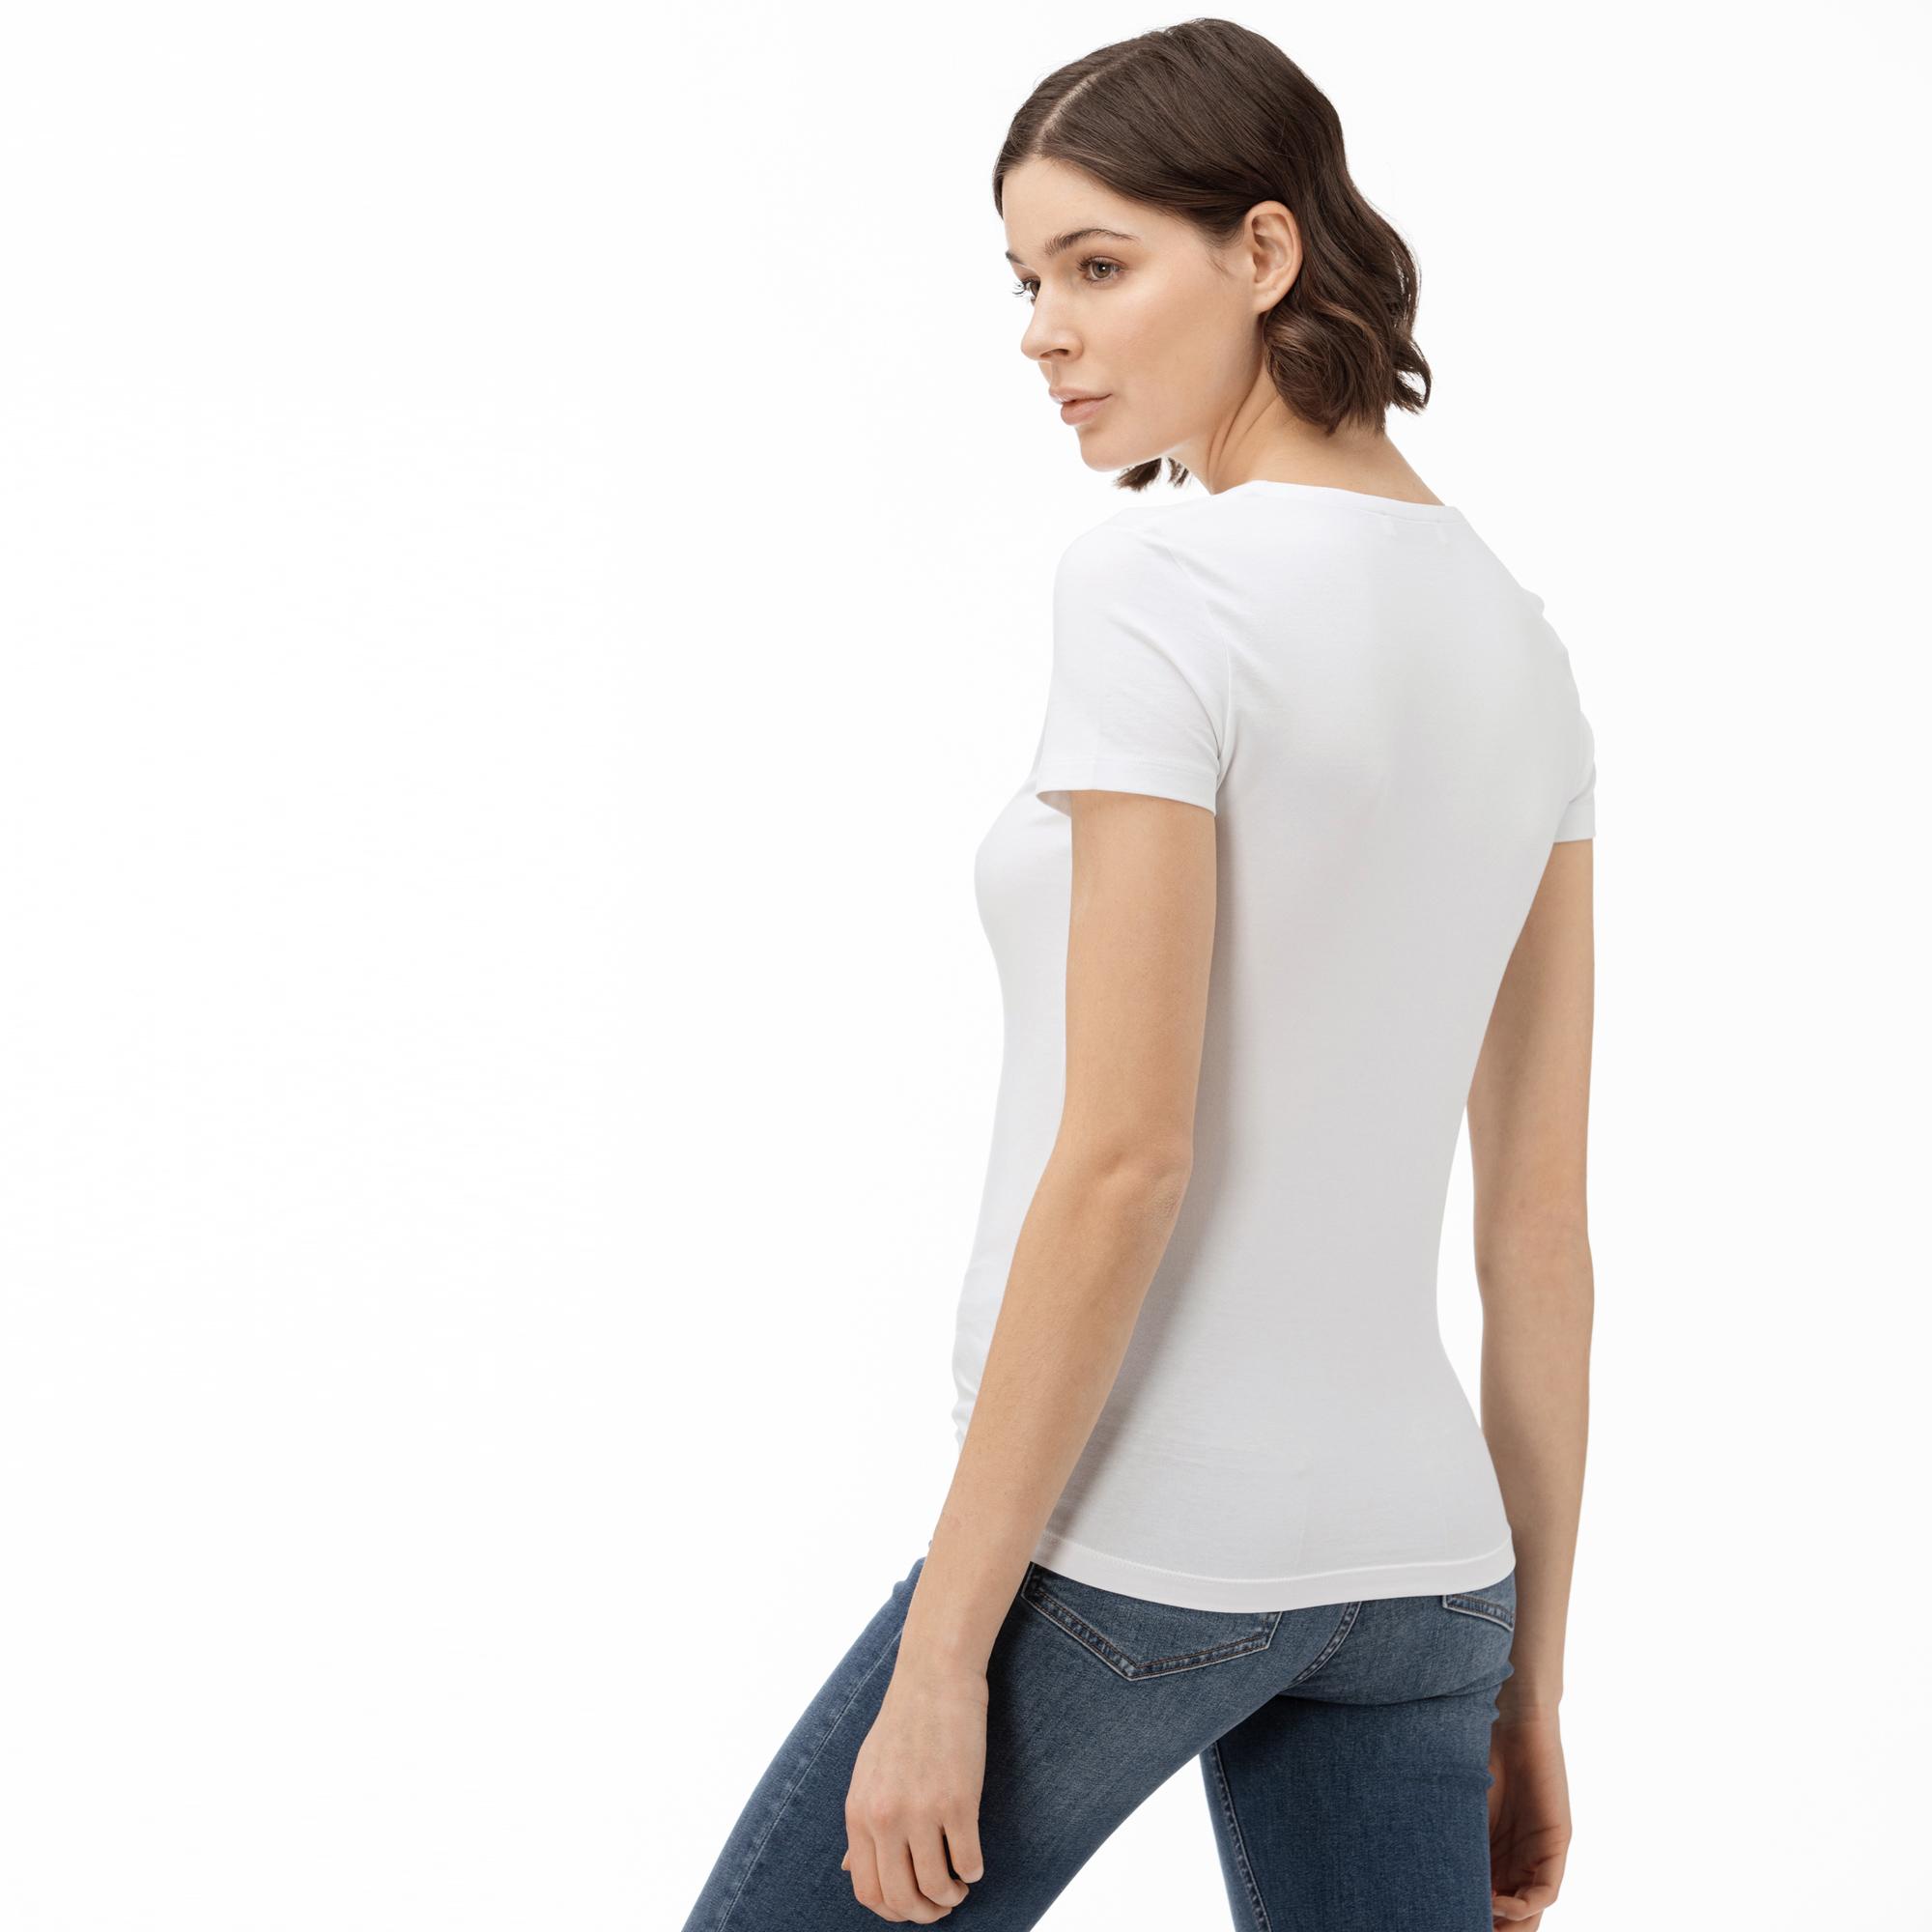 Lacoste Kadın Slim Fit V Yaka Beyaz T-Shirt. 1